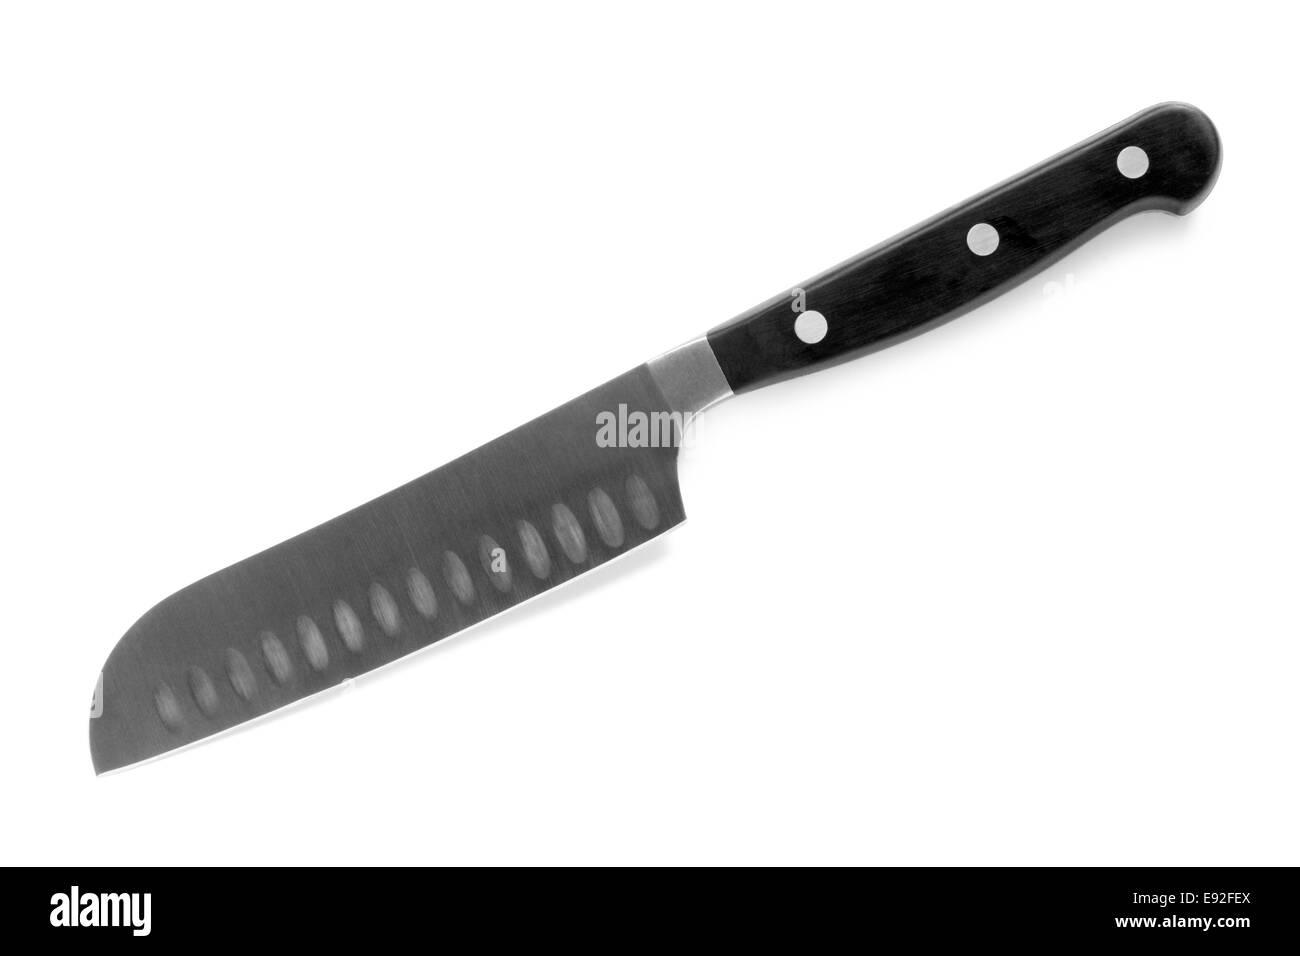 Chefs knife Stock Photo